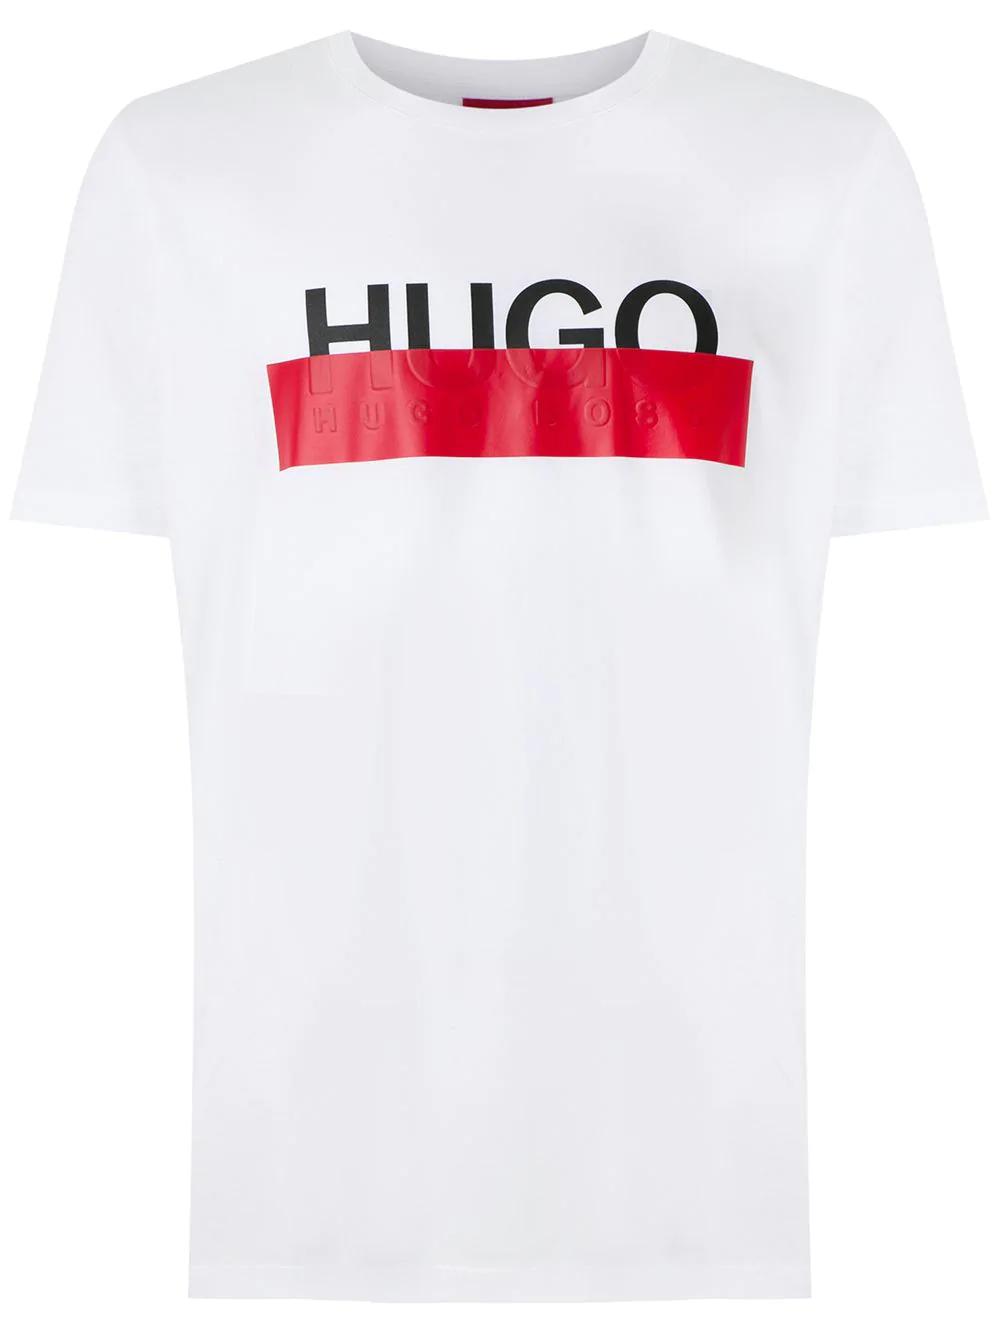 BOSS by Hugo Boss Olive Logo T Shirt in 